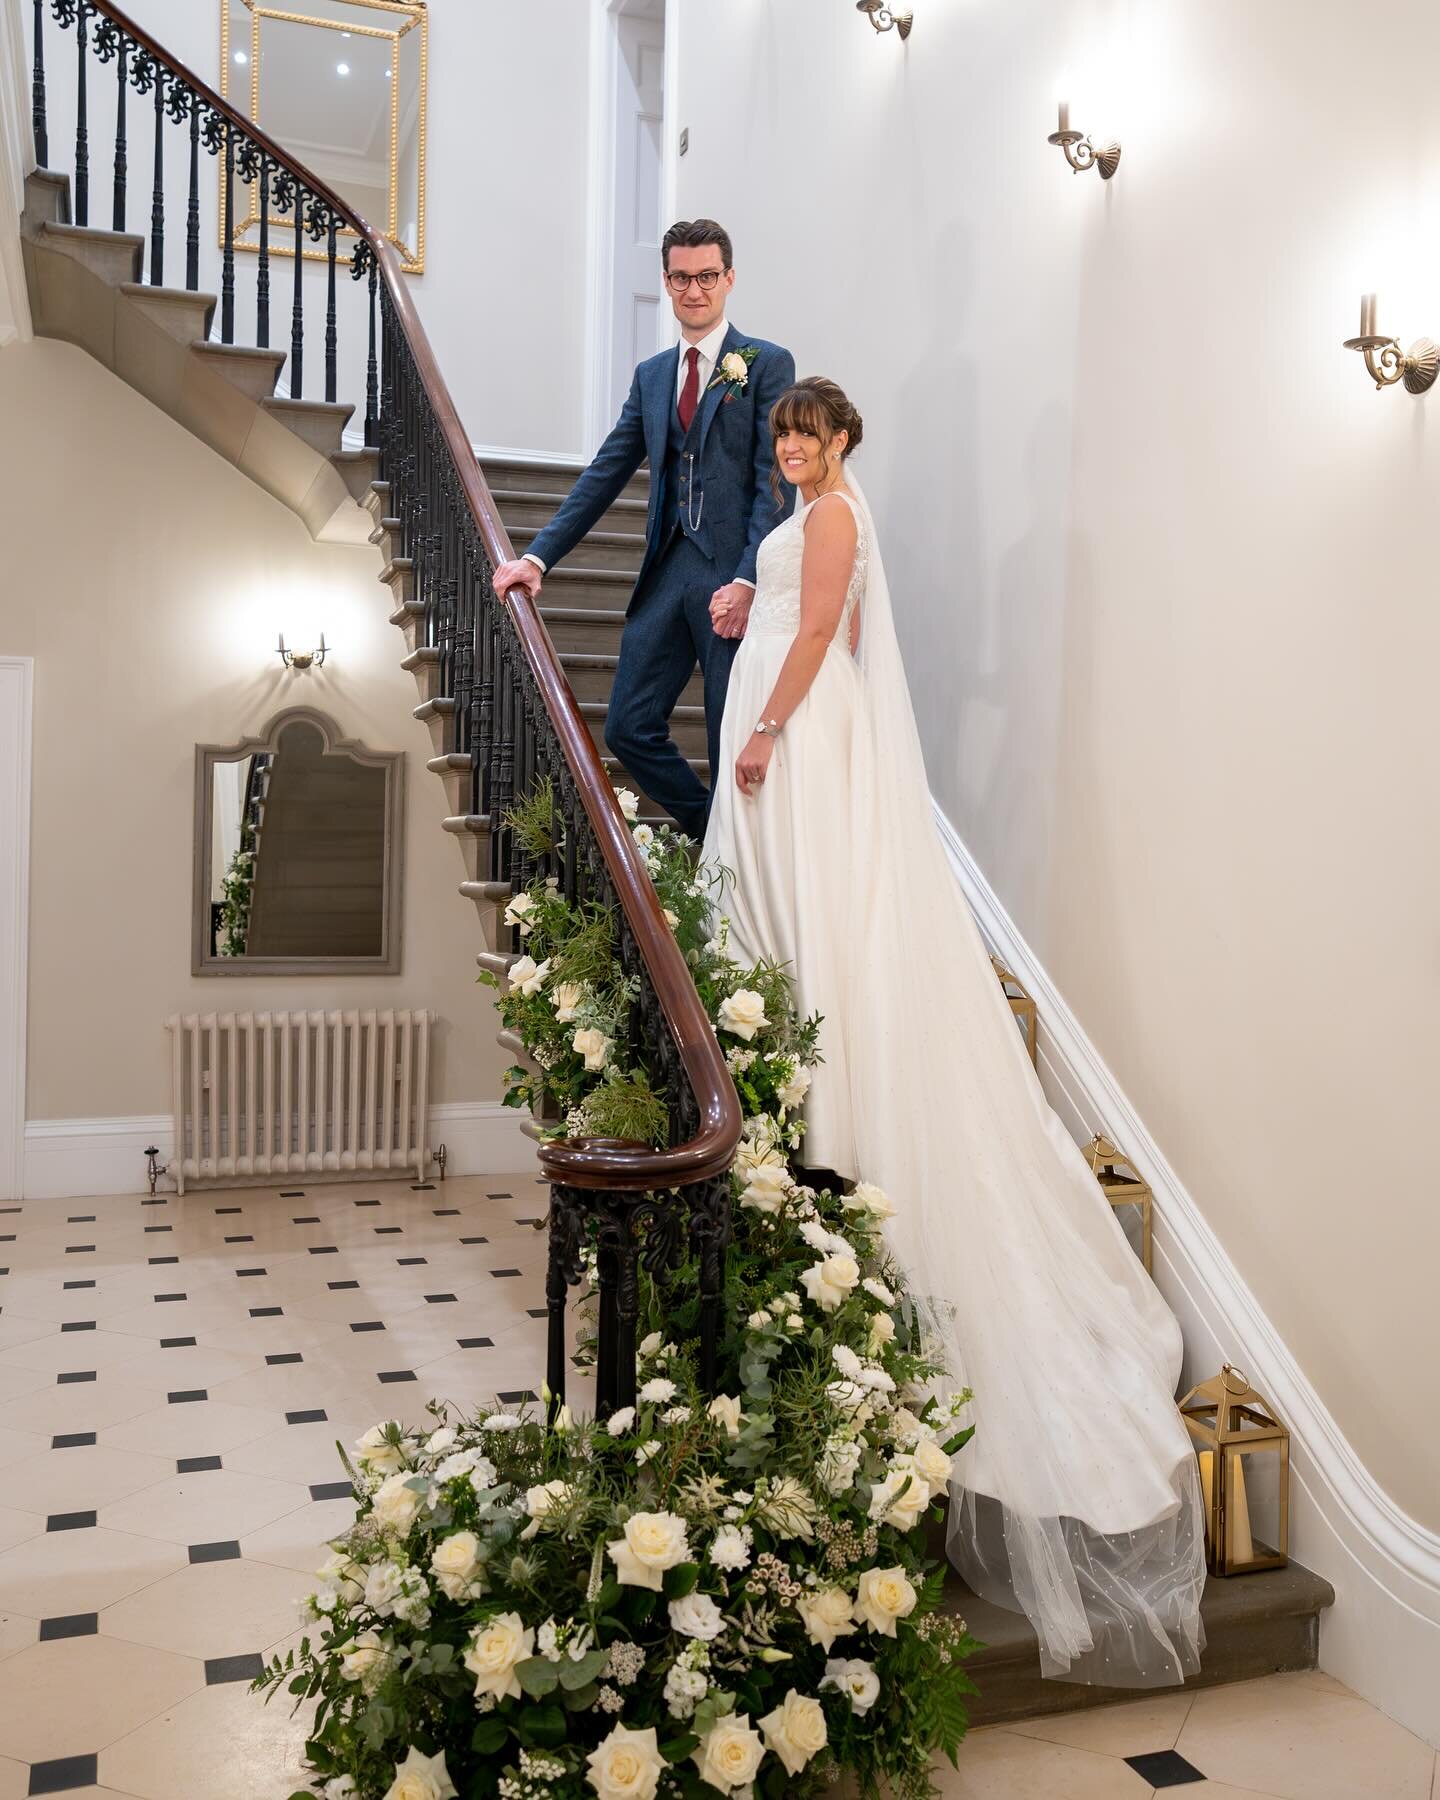 The iconic @sttewdricshouse staircase is a must have photo opportunity 🥰

www.ctmphotos.co.uk

#weddingdress #weddingday #weddings #love #husbandandwife #brideandgroom #bride #bridal #bridetobe #groom #husband #wife 

#welshwedding #welshweddingphot